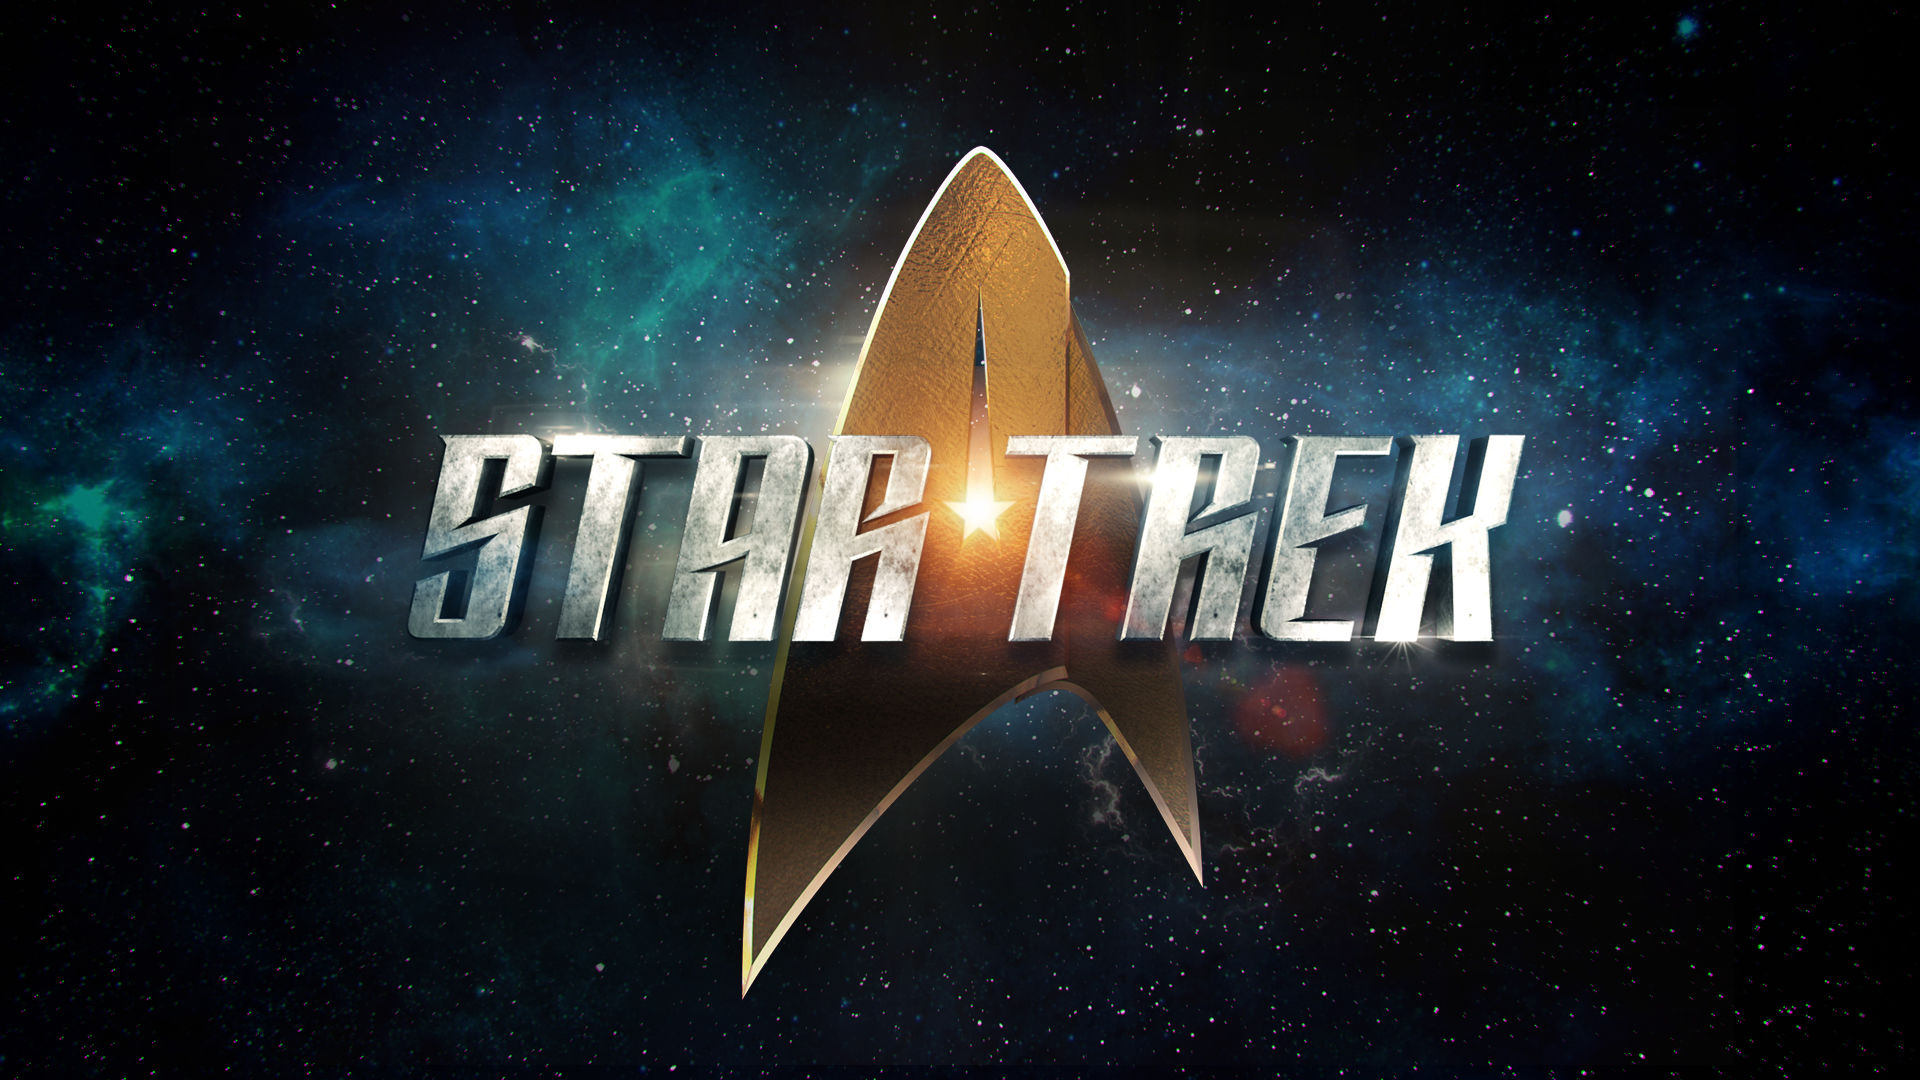 Star Trek: annunciati diversi nuovi progetti per il franchise thumbnail